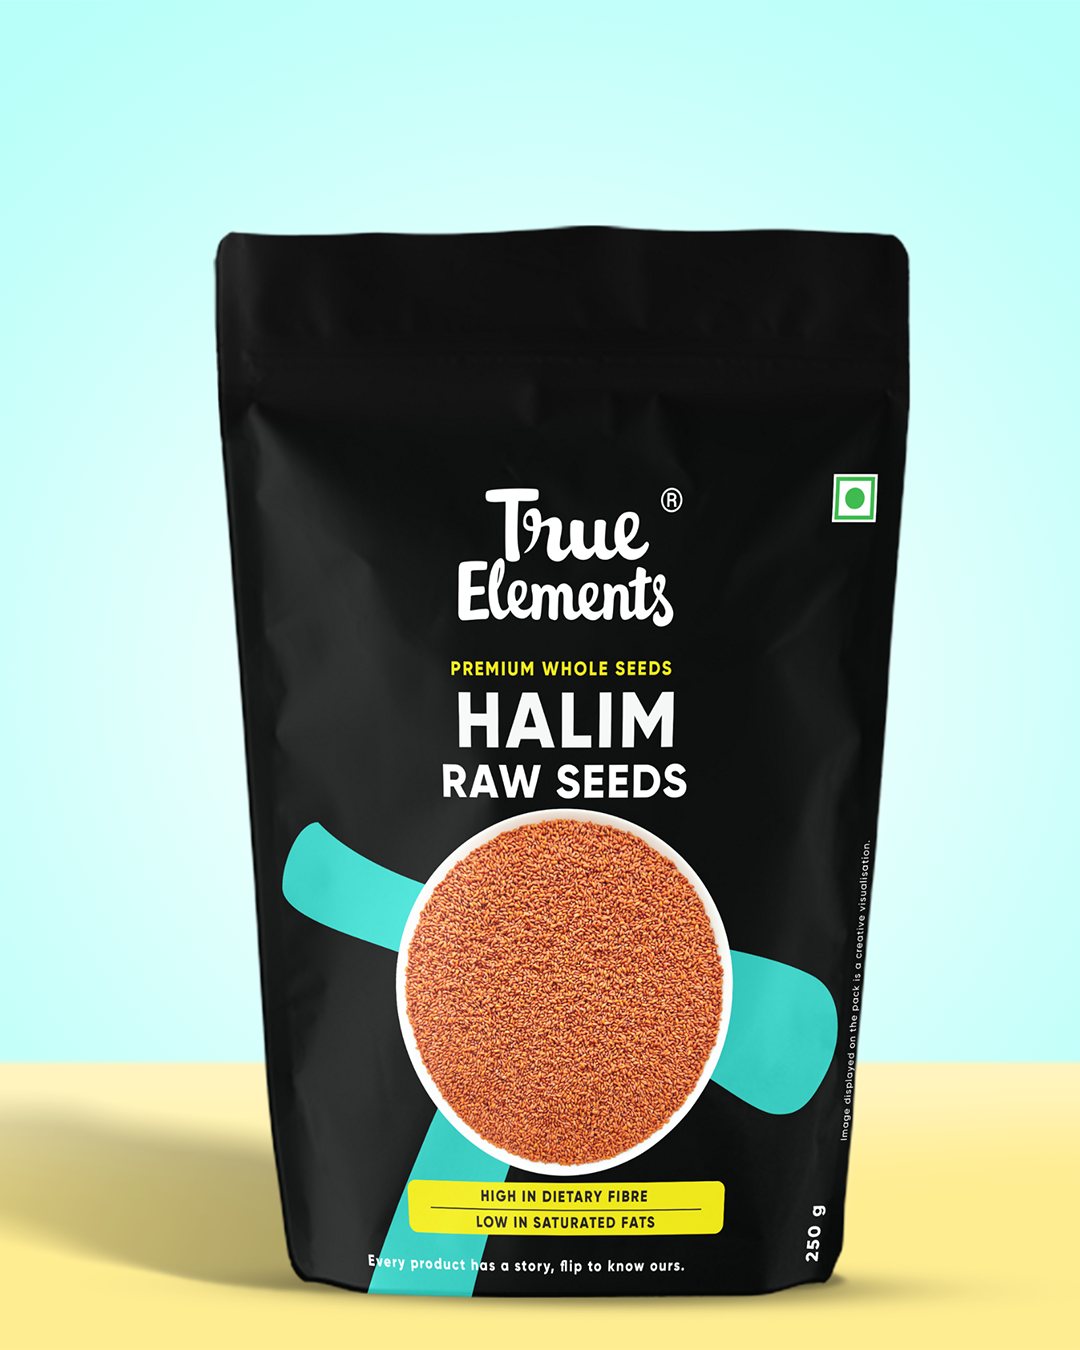 True elements raw halim seeds 250g Pouch (Premium Whole Seeds)